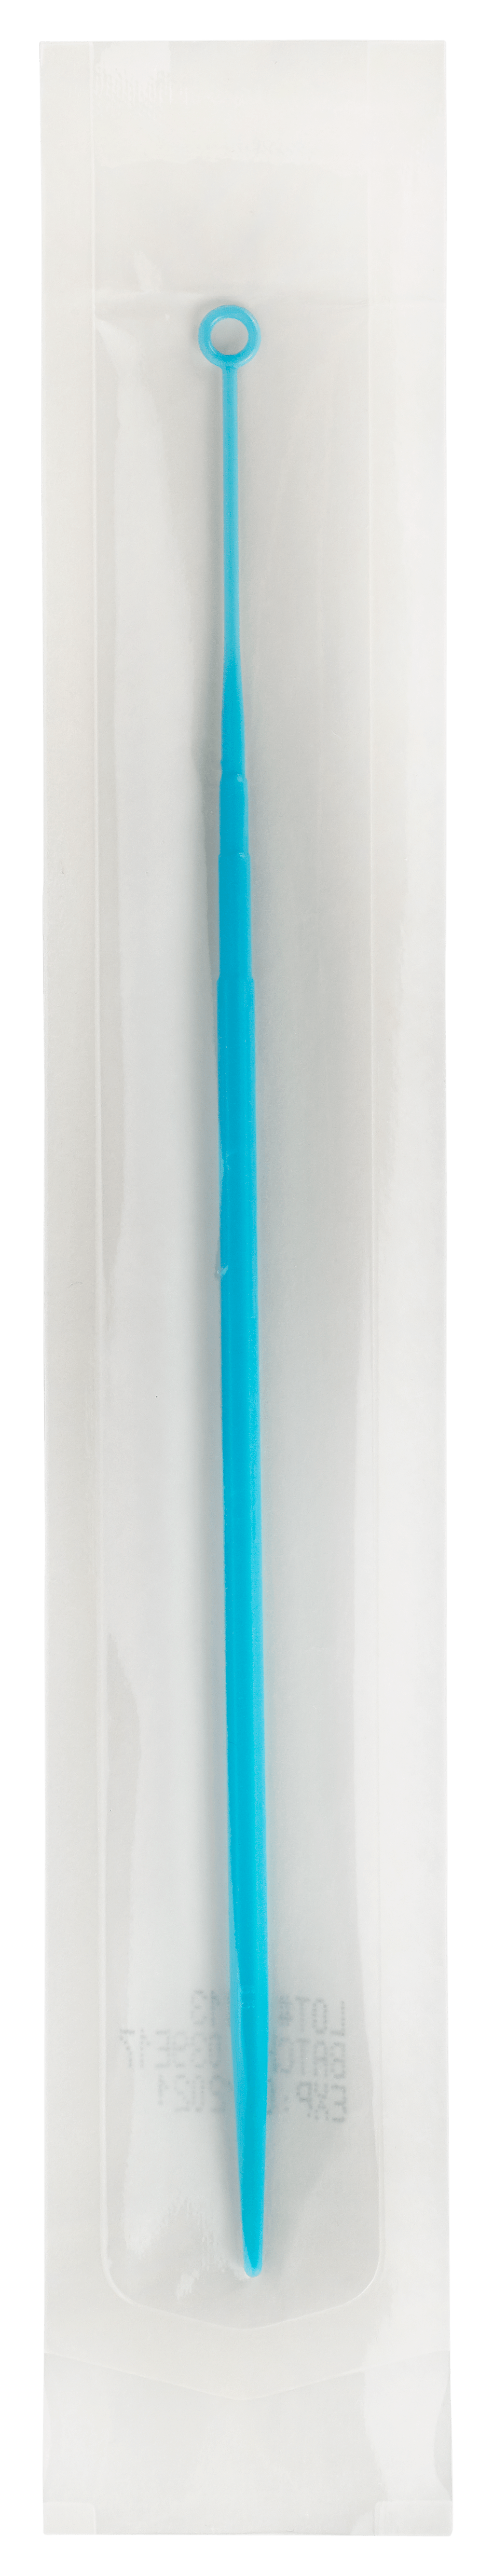 Plastic Inoculating Loops, Needles & Spreaders CD179S01 10 µL Flexible Light Blue Plastic Inoculation Loop